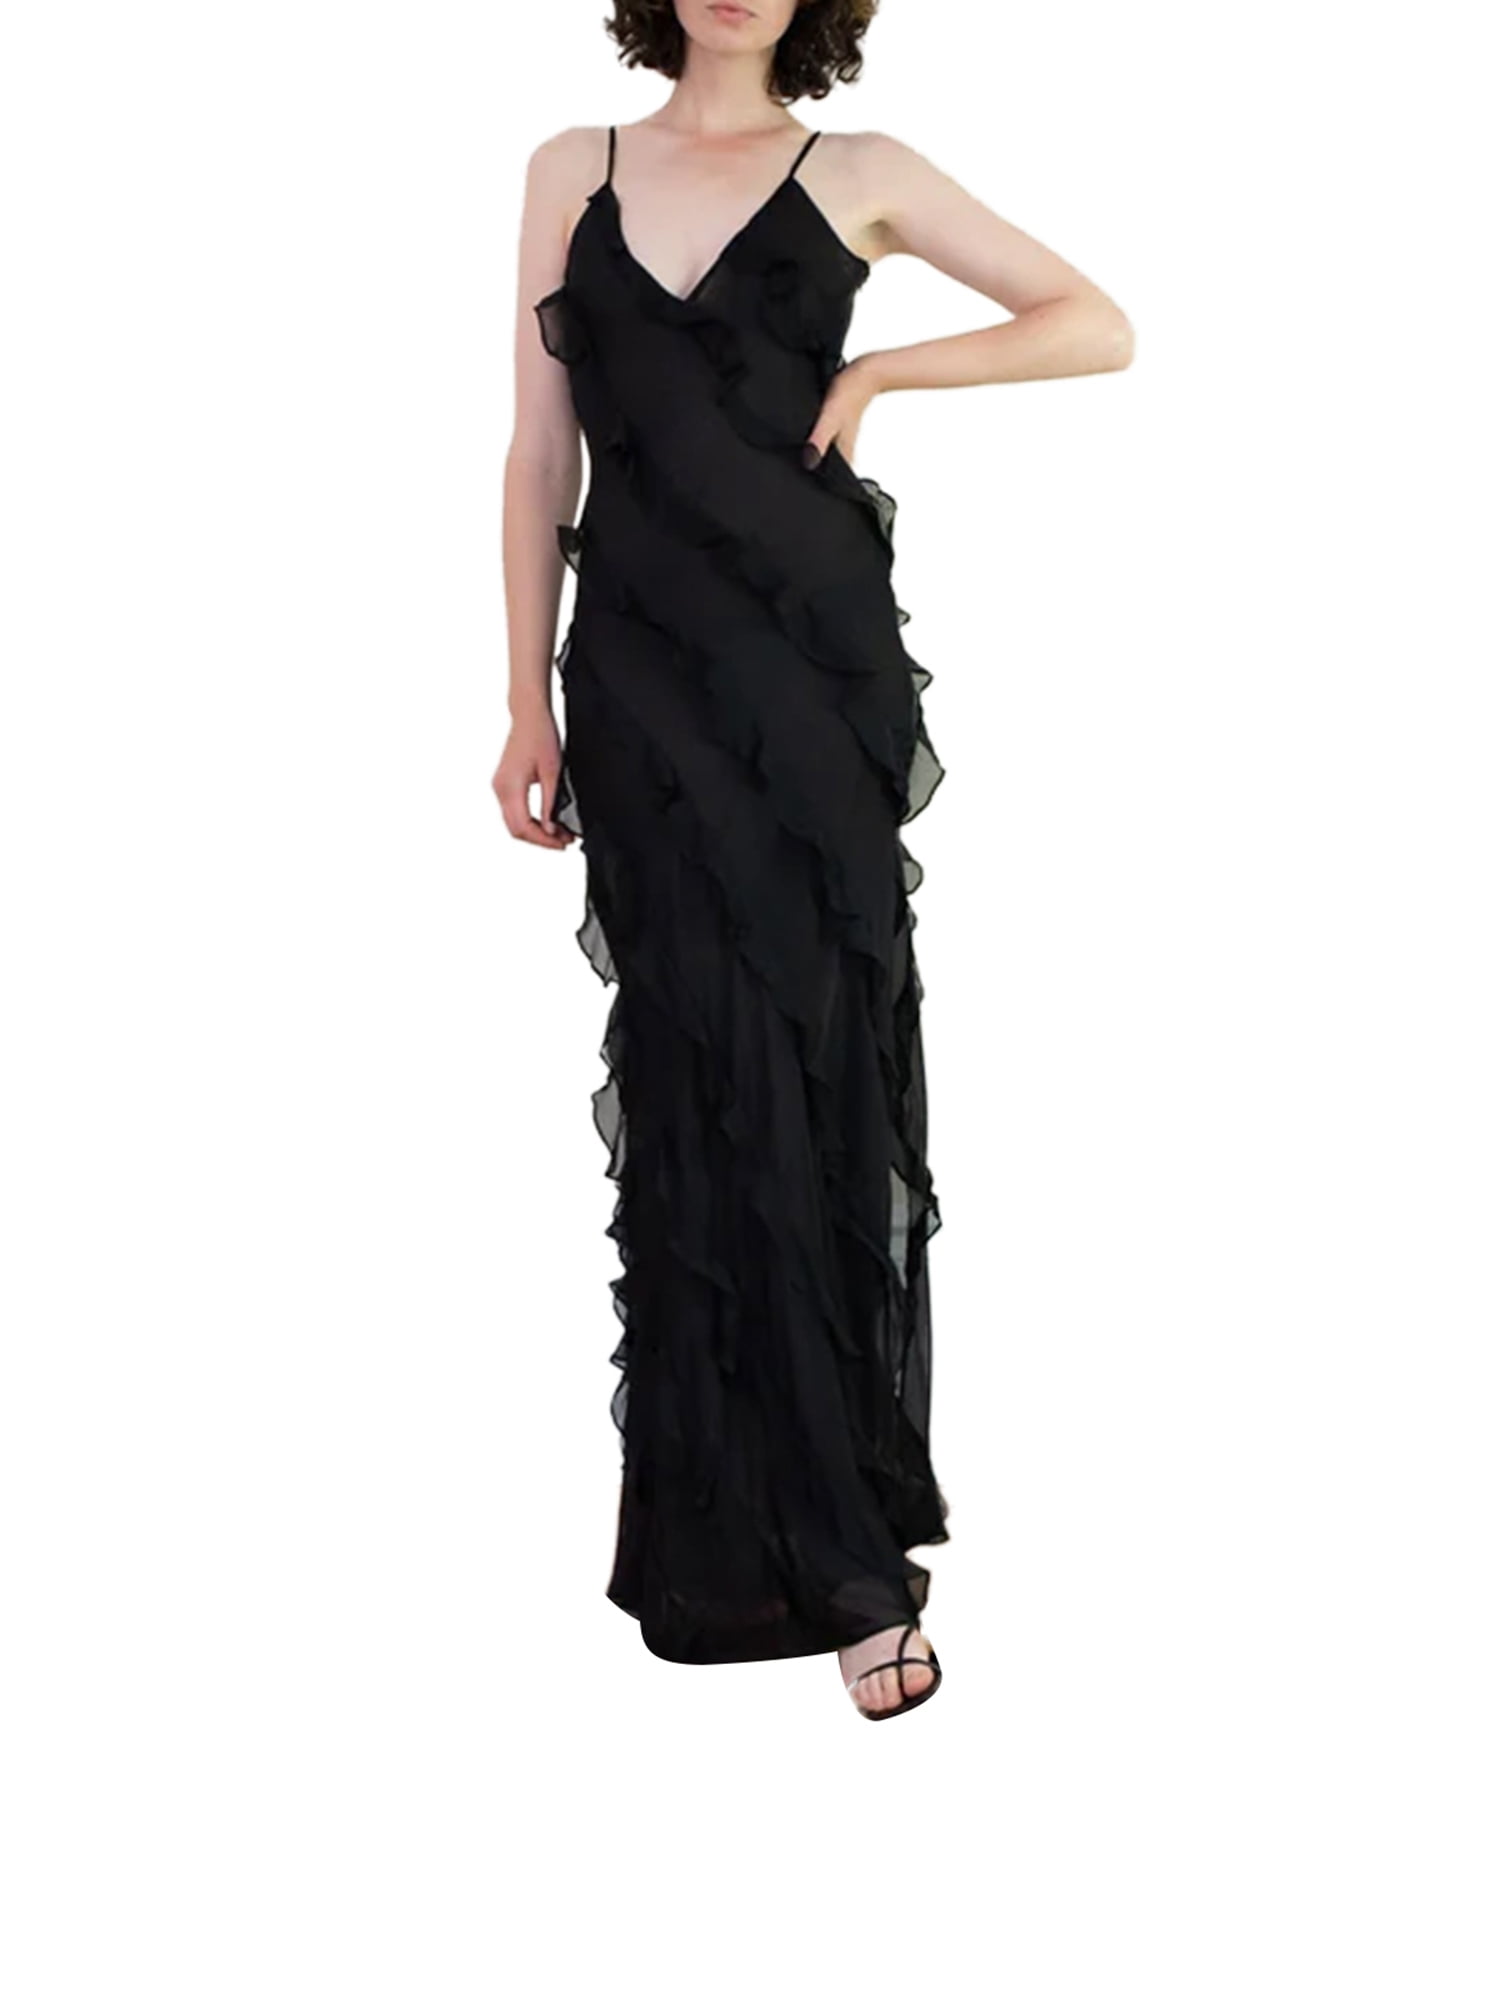 ✓Women's Spaghetti Strap Ruffled Casual Beach Party Loose Summer Long Dress  | eBay